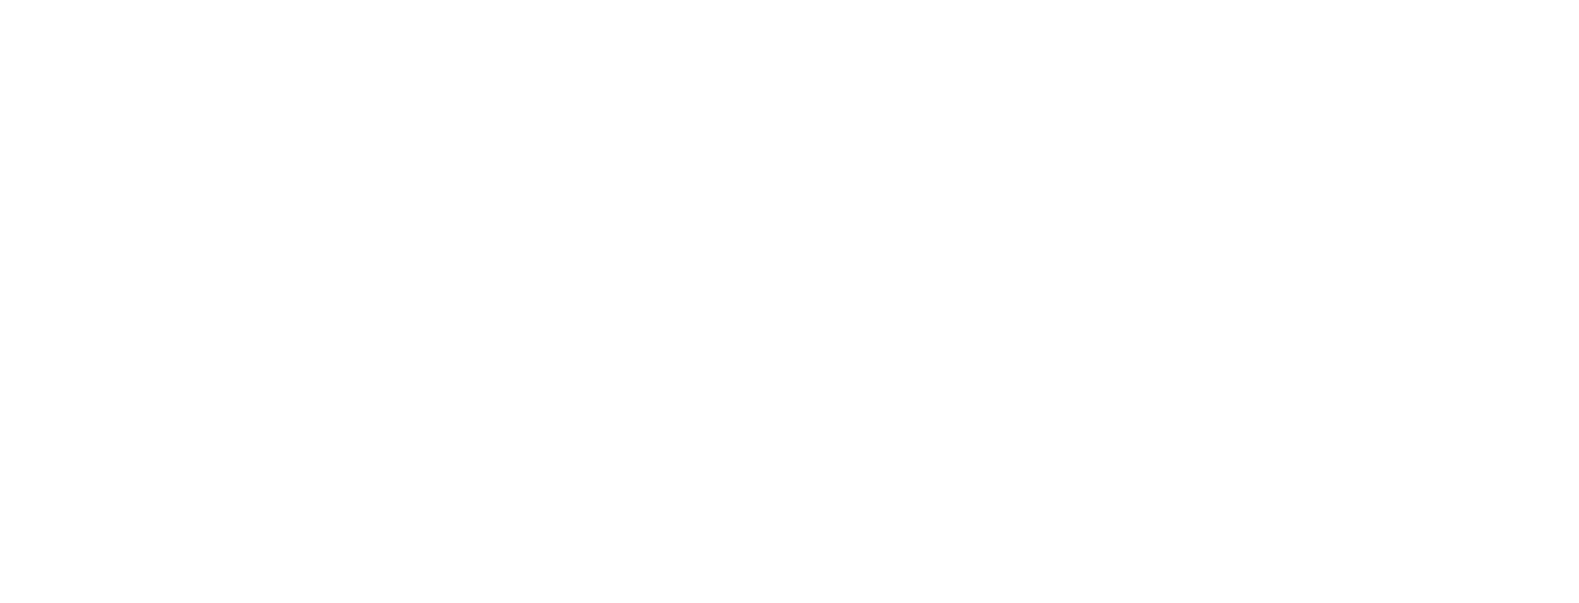 First Western Financial logo large for dark backgrounds (transparent PNG)